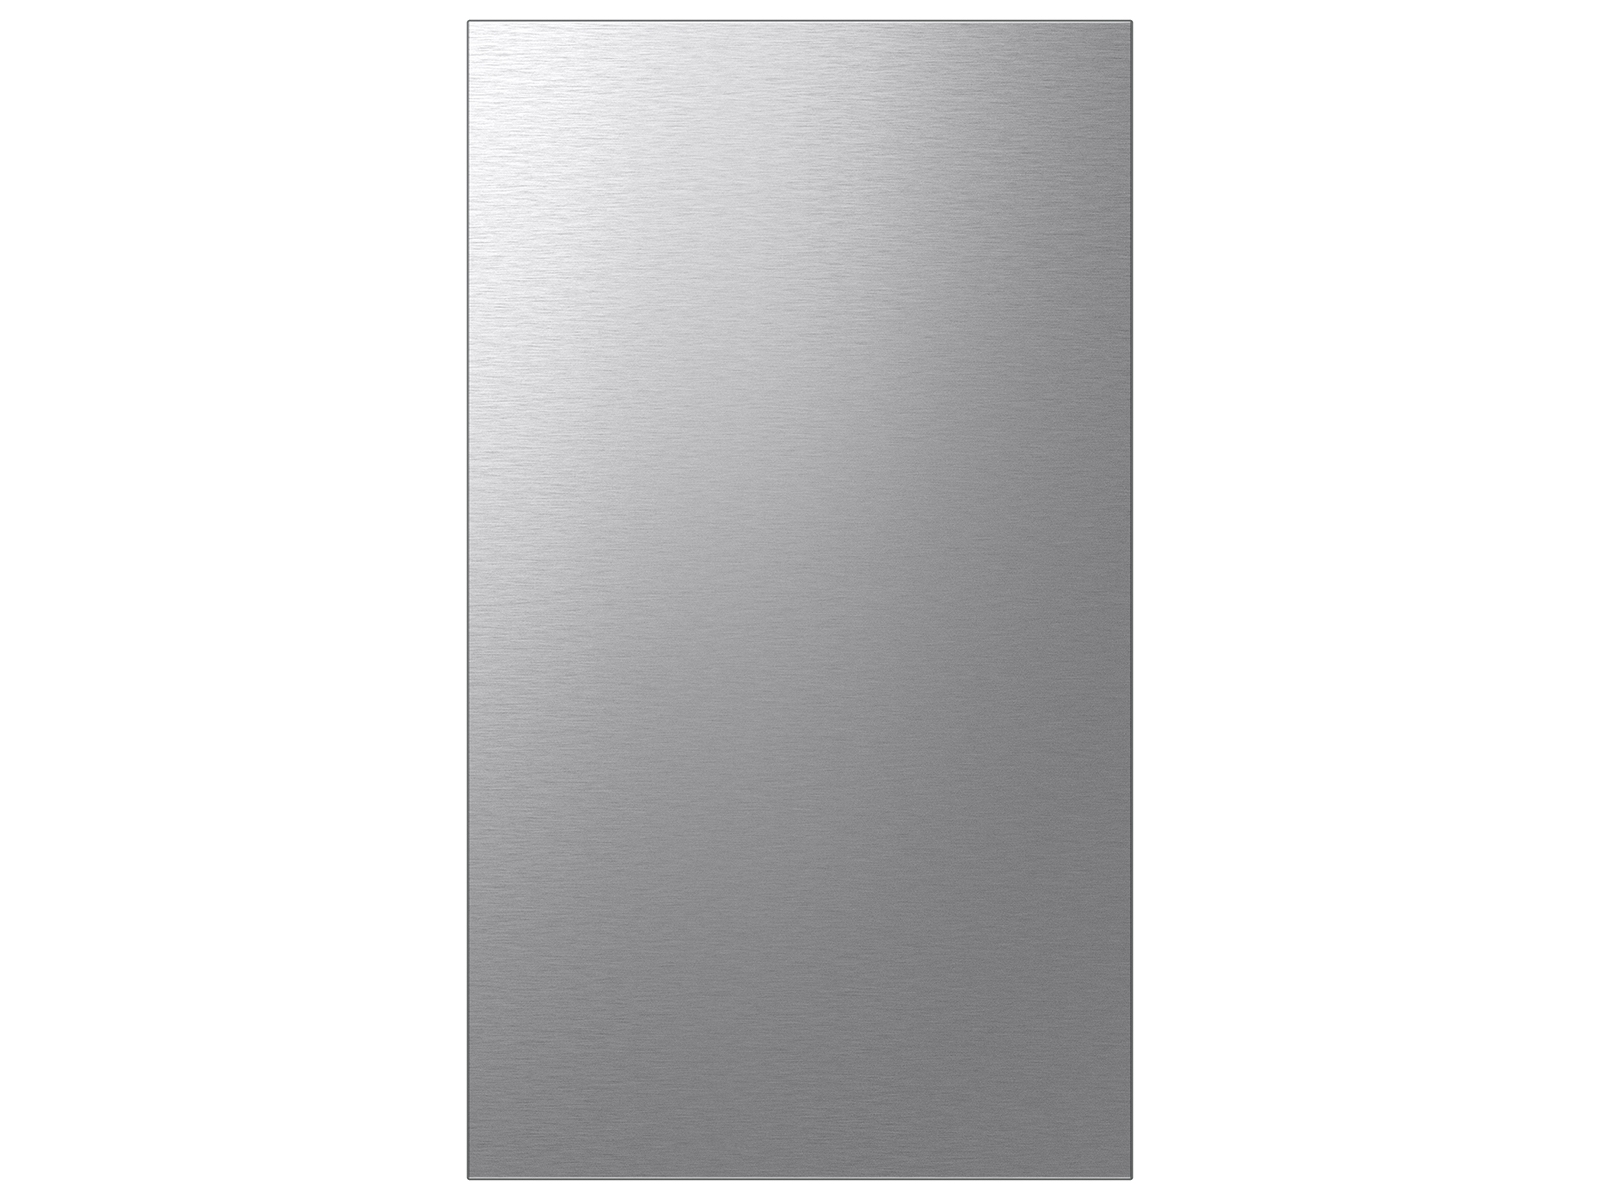 Thumbnail image of Bespoke 4-Door Flex™ Refrigerator Panel in Stainless Steel - Bottom Panel